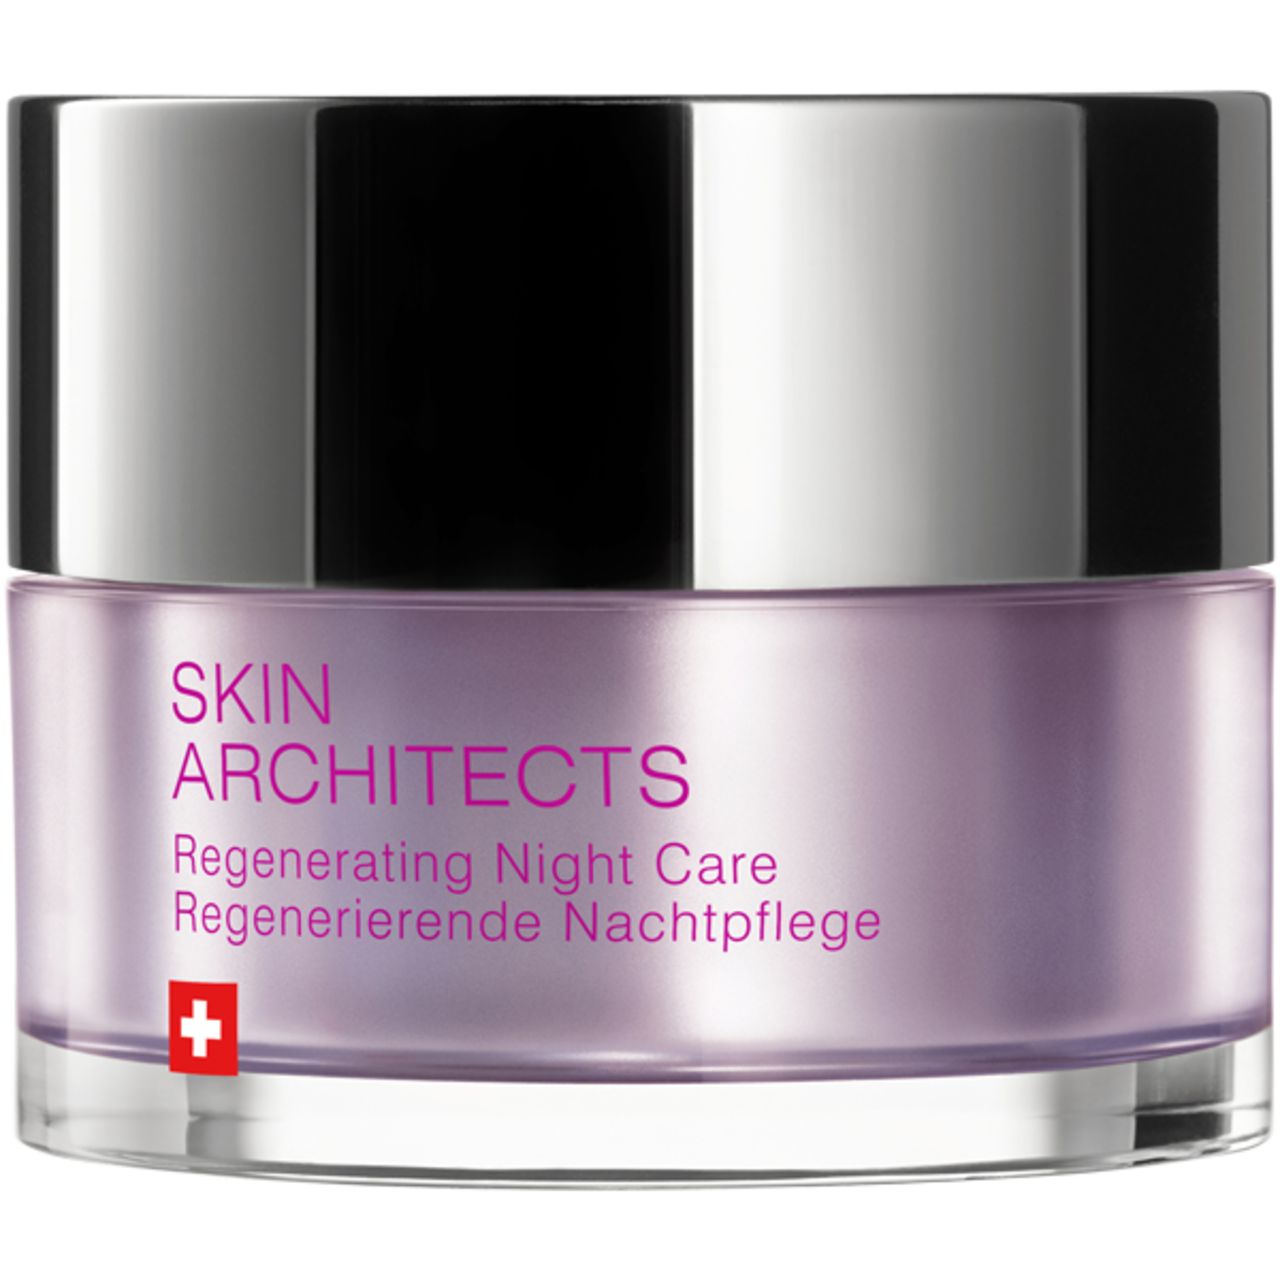 Artemis of Switzerland Skin Architects Regenerating Night Care